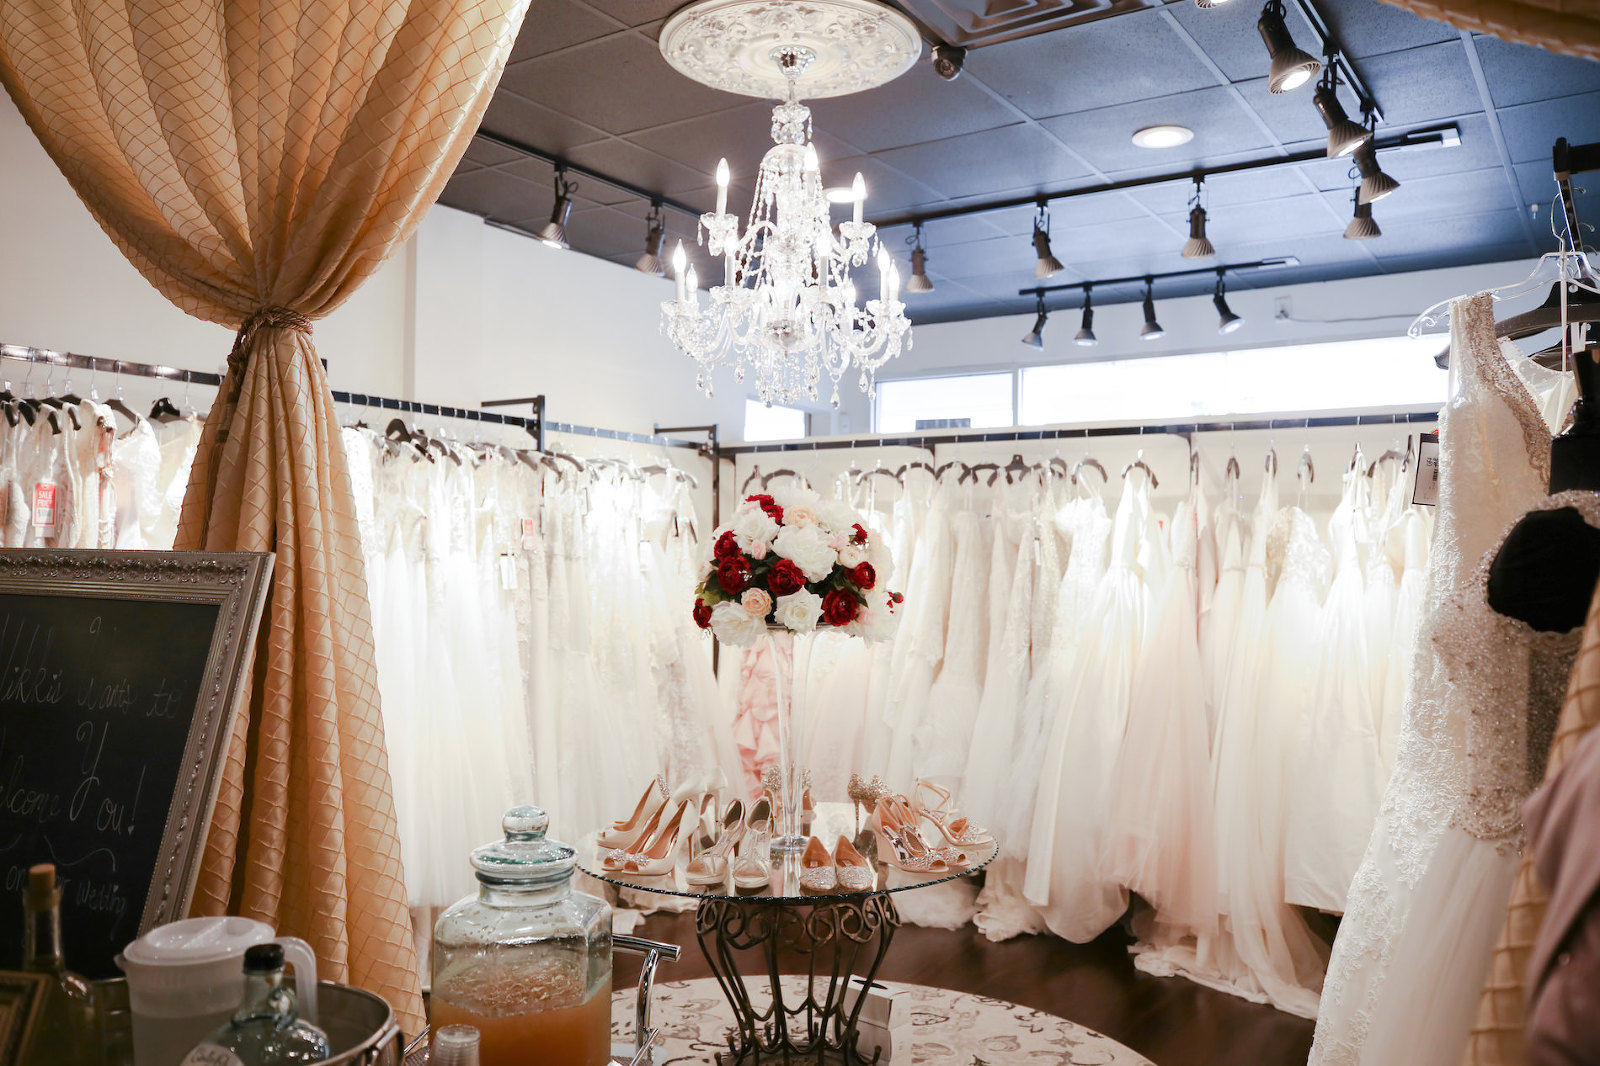 nikki's bridal boutique